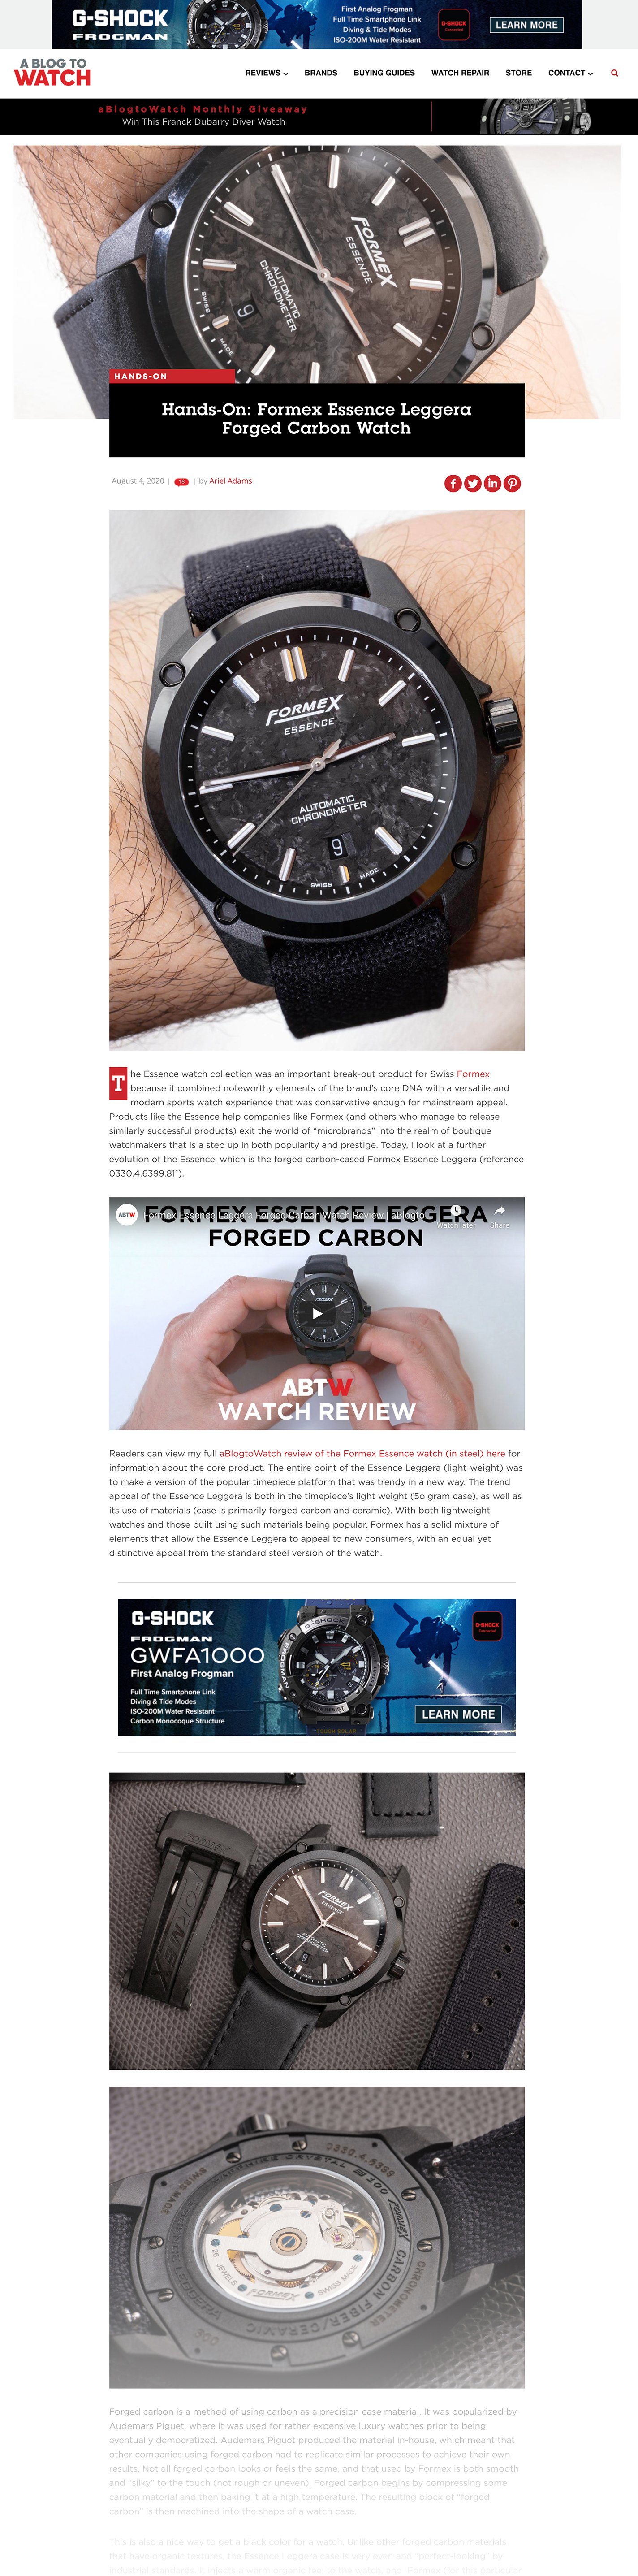 ablogtowatch article featuring formex essence leggera watch